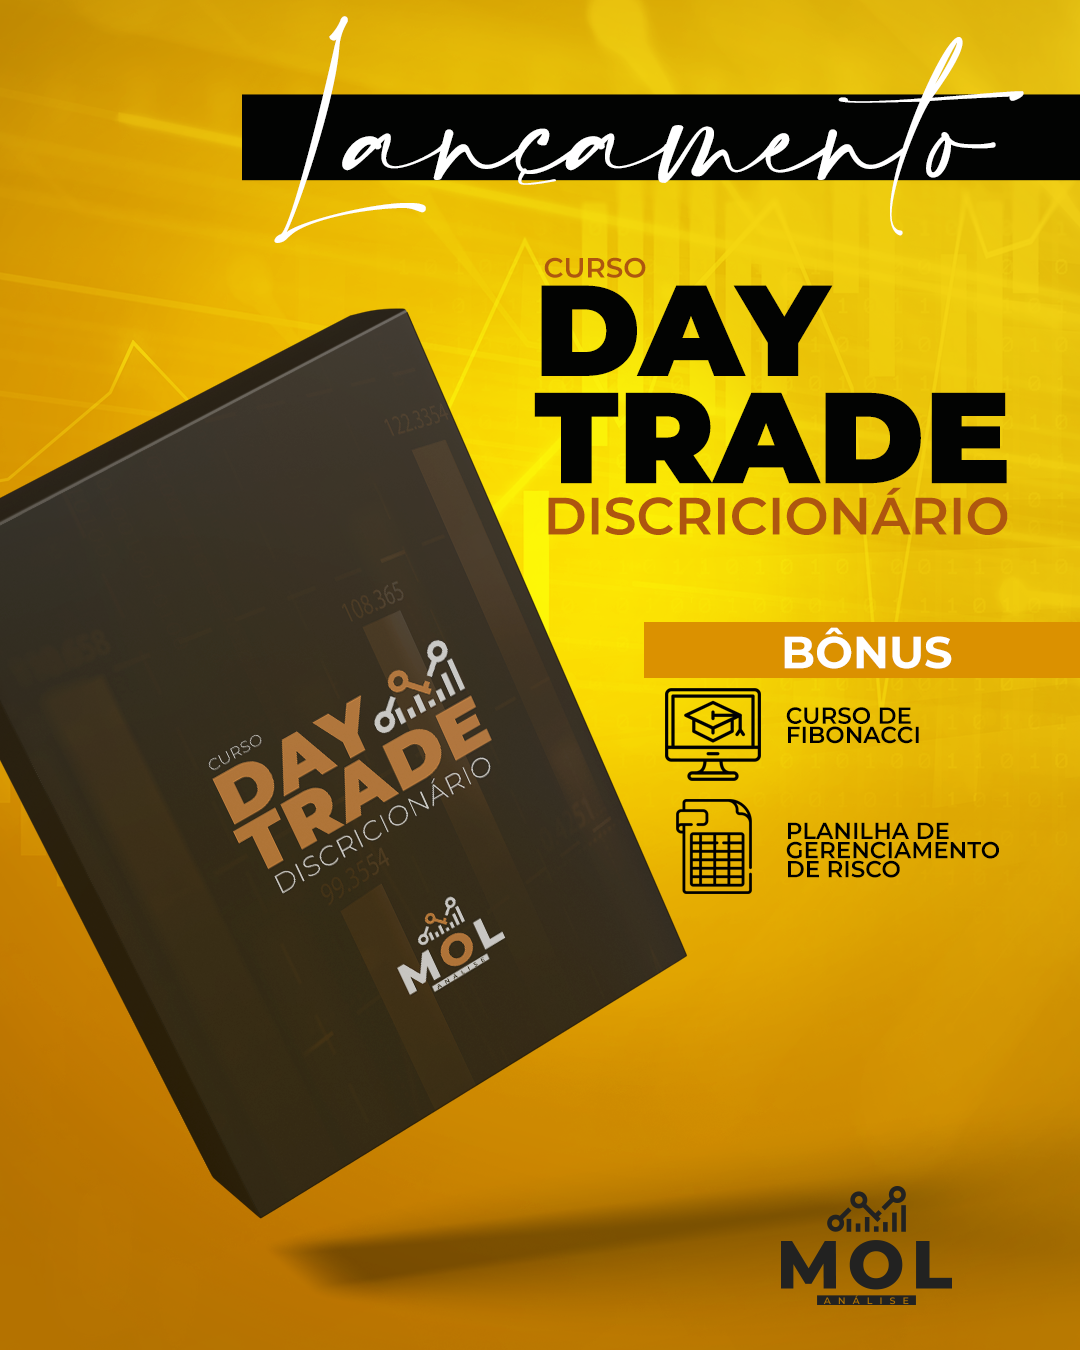 Bruno Rafael (MOL Educacional) - Day Trade Discricionário